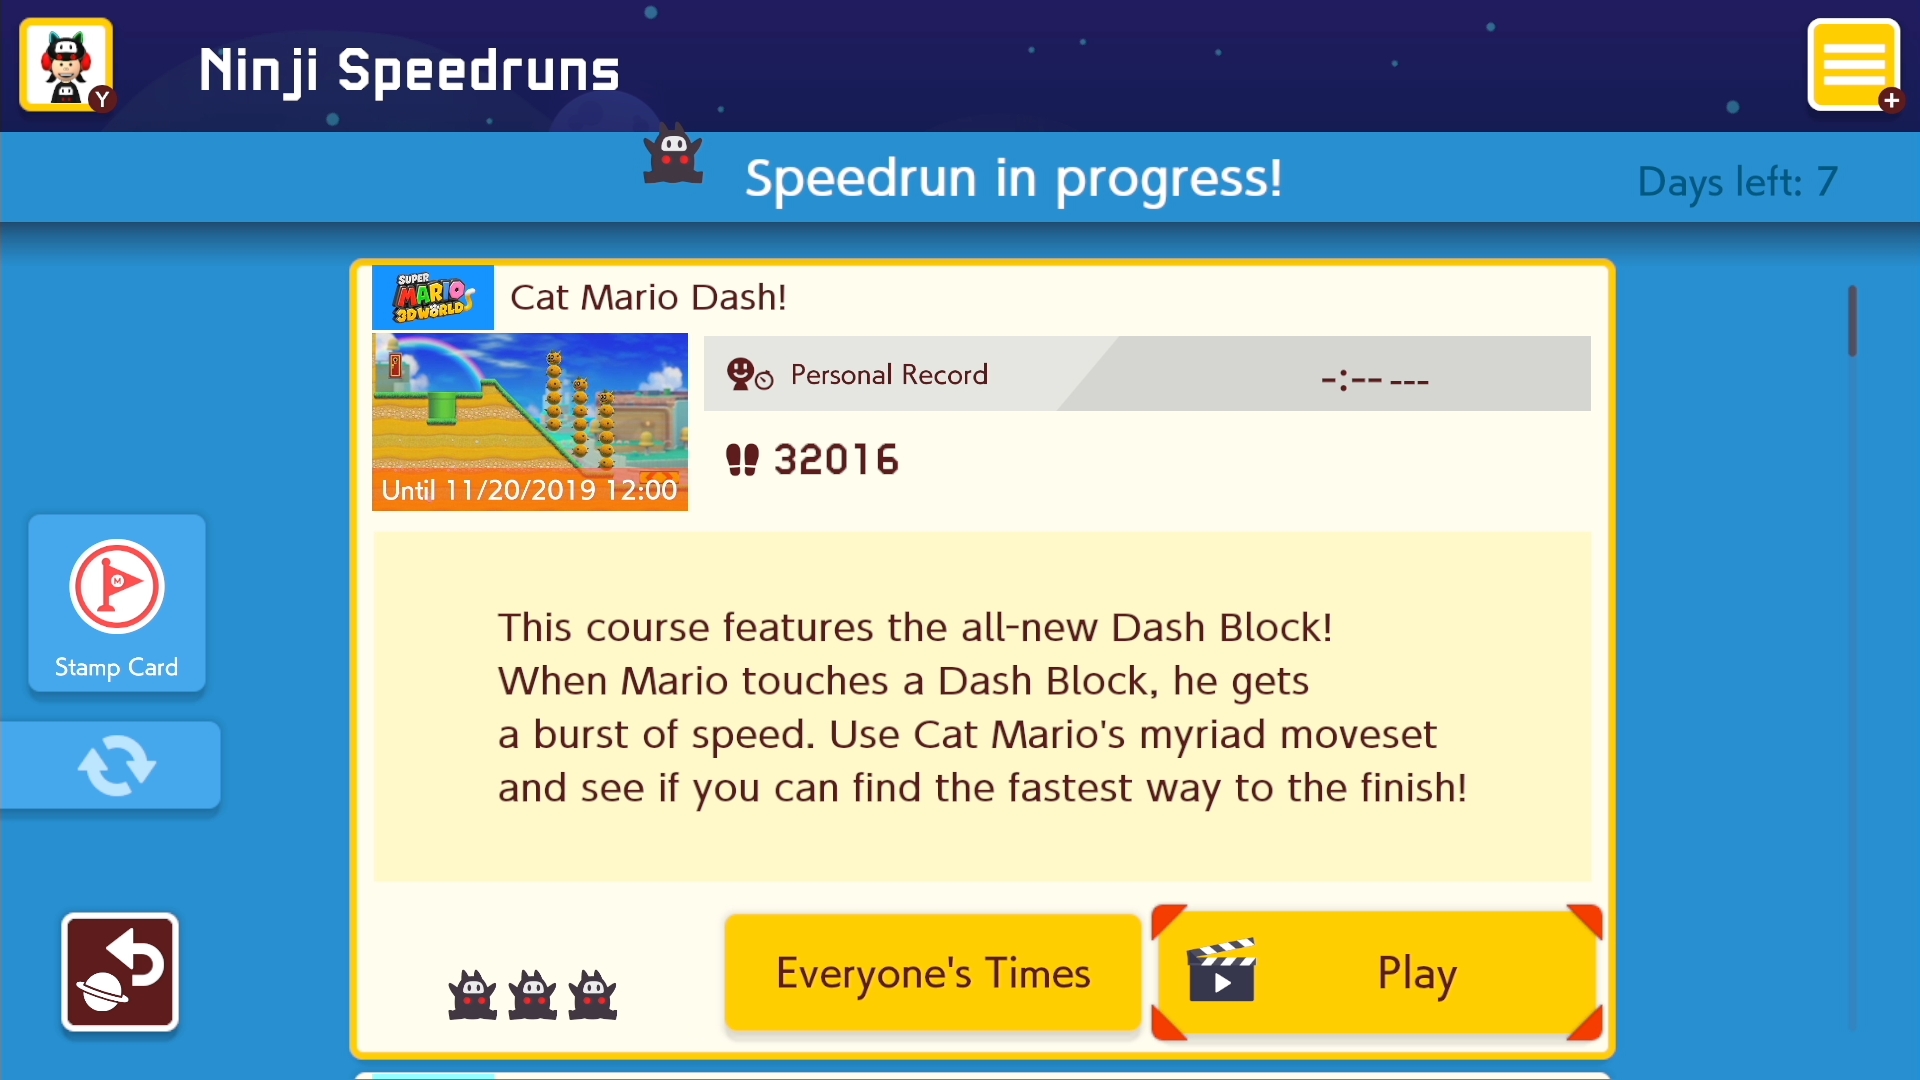 Cat Mario 4 - Speedrun